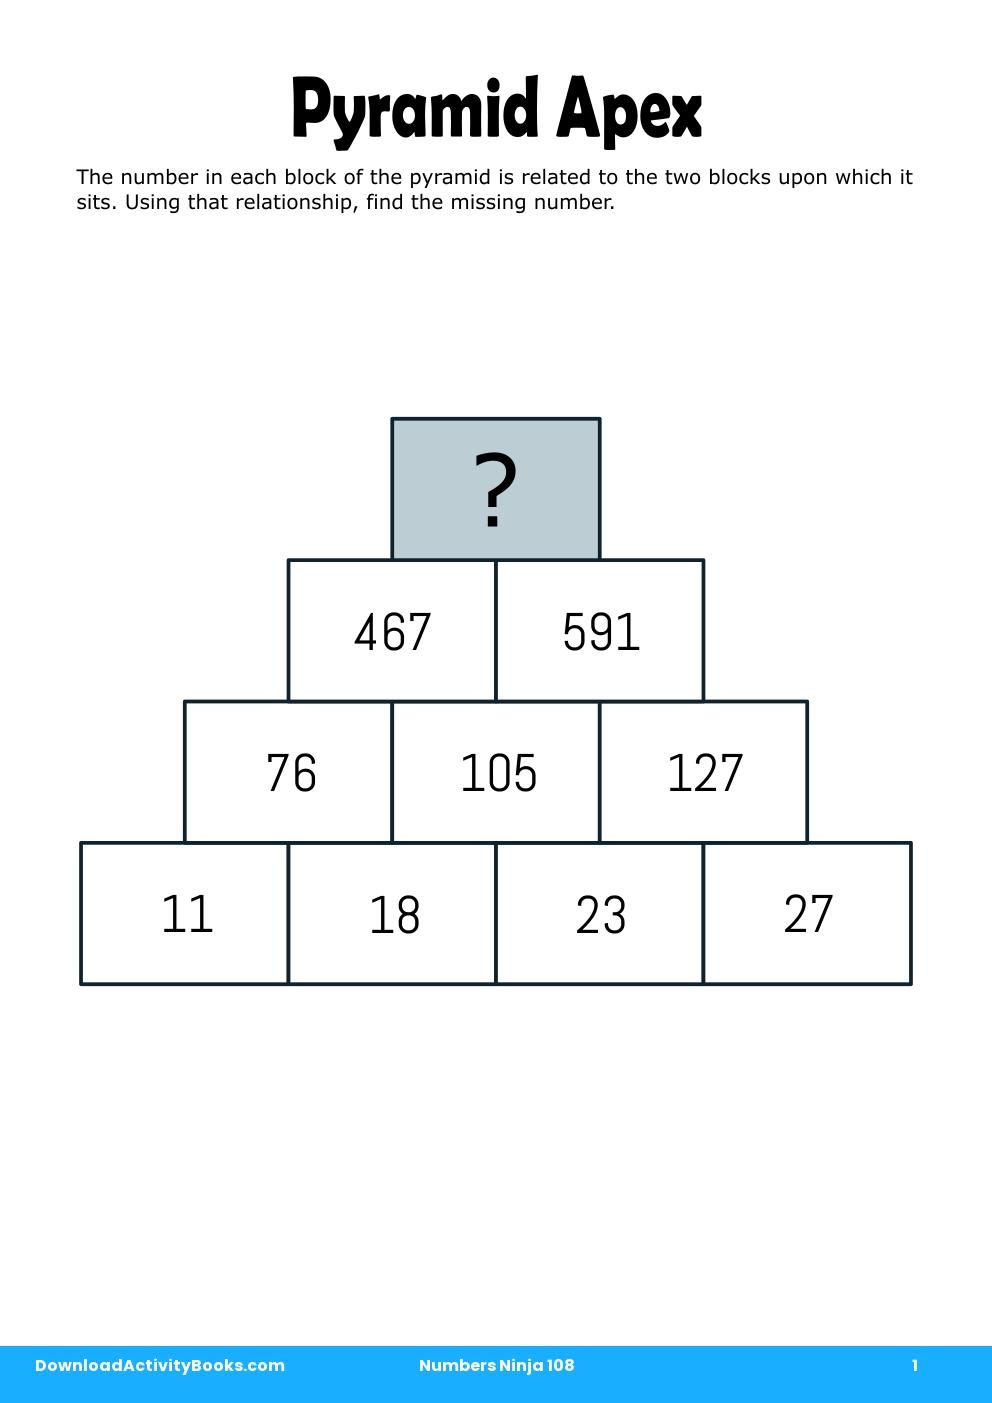 Pyramid Apex in Numbers Ninja 108